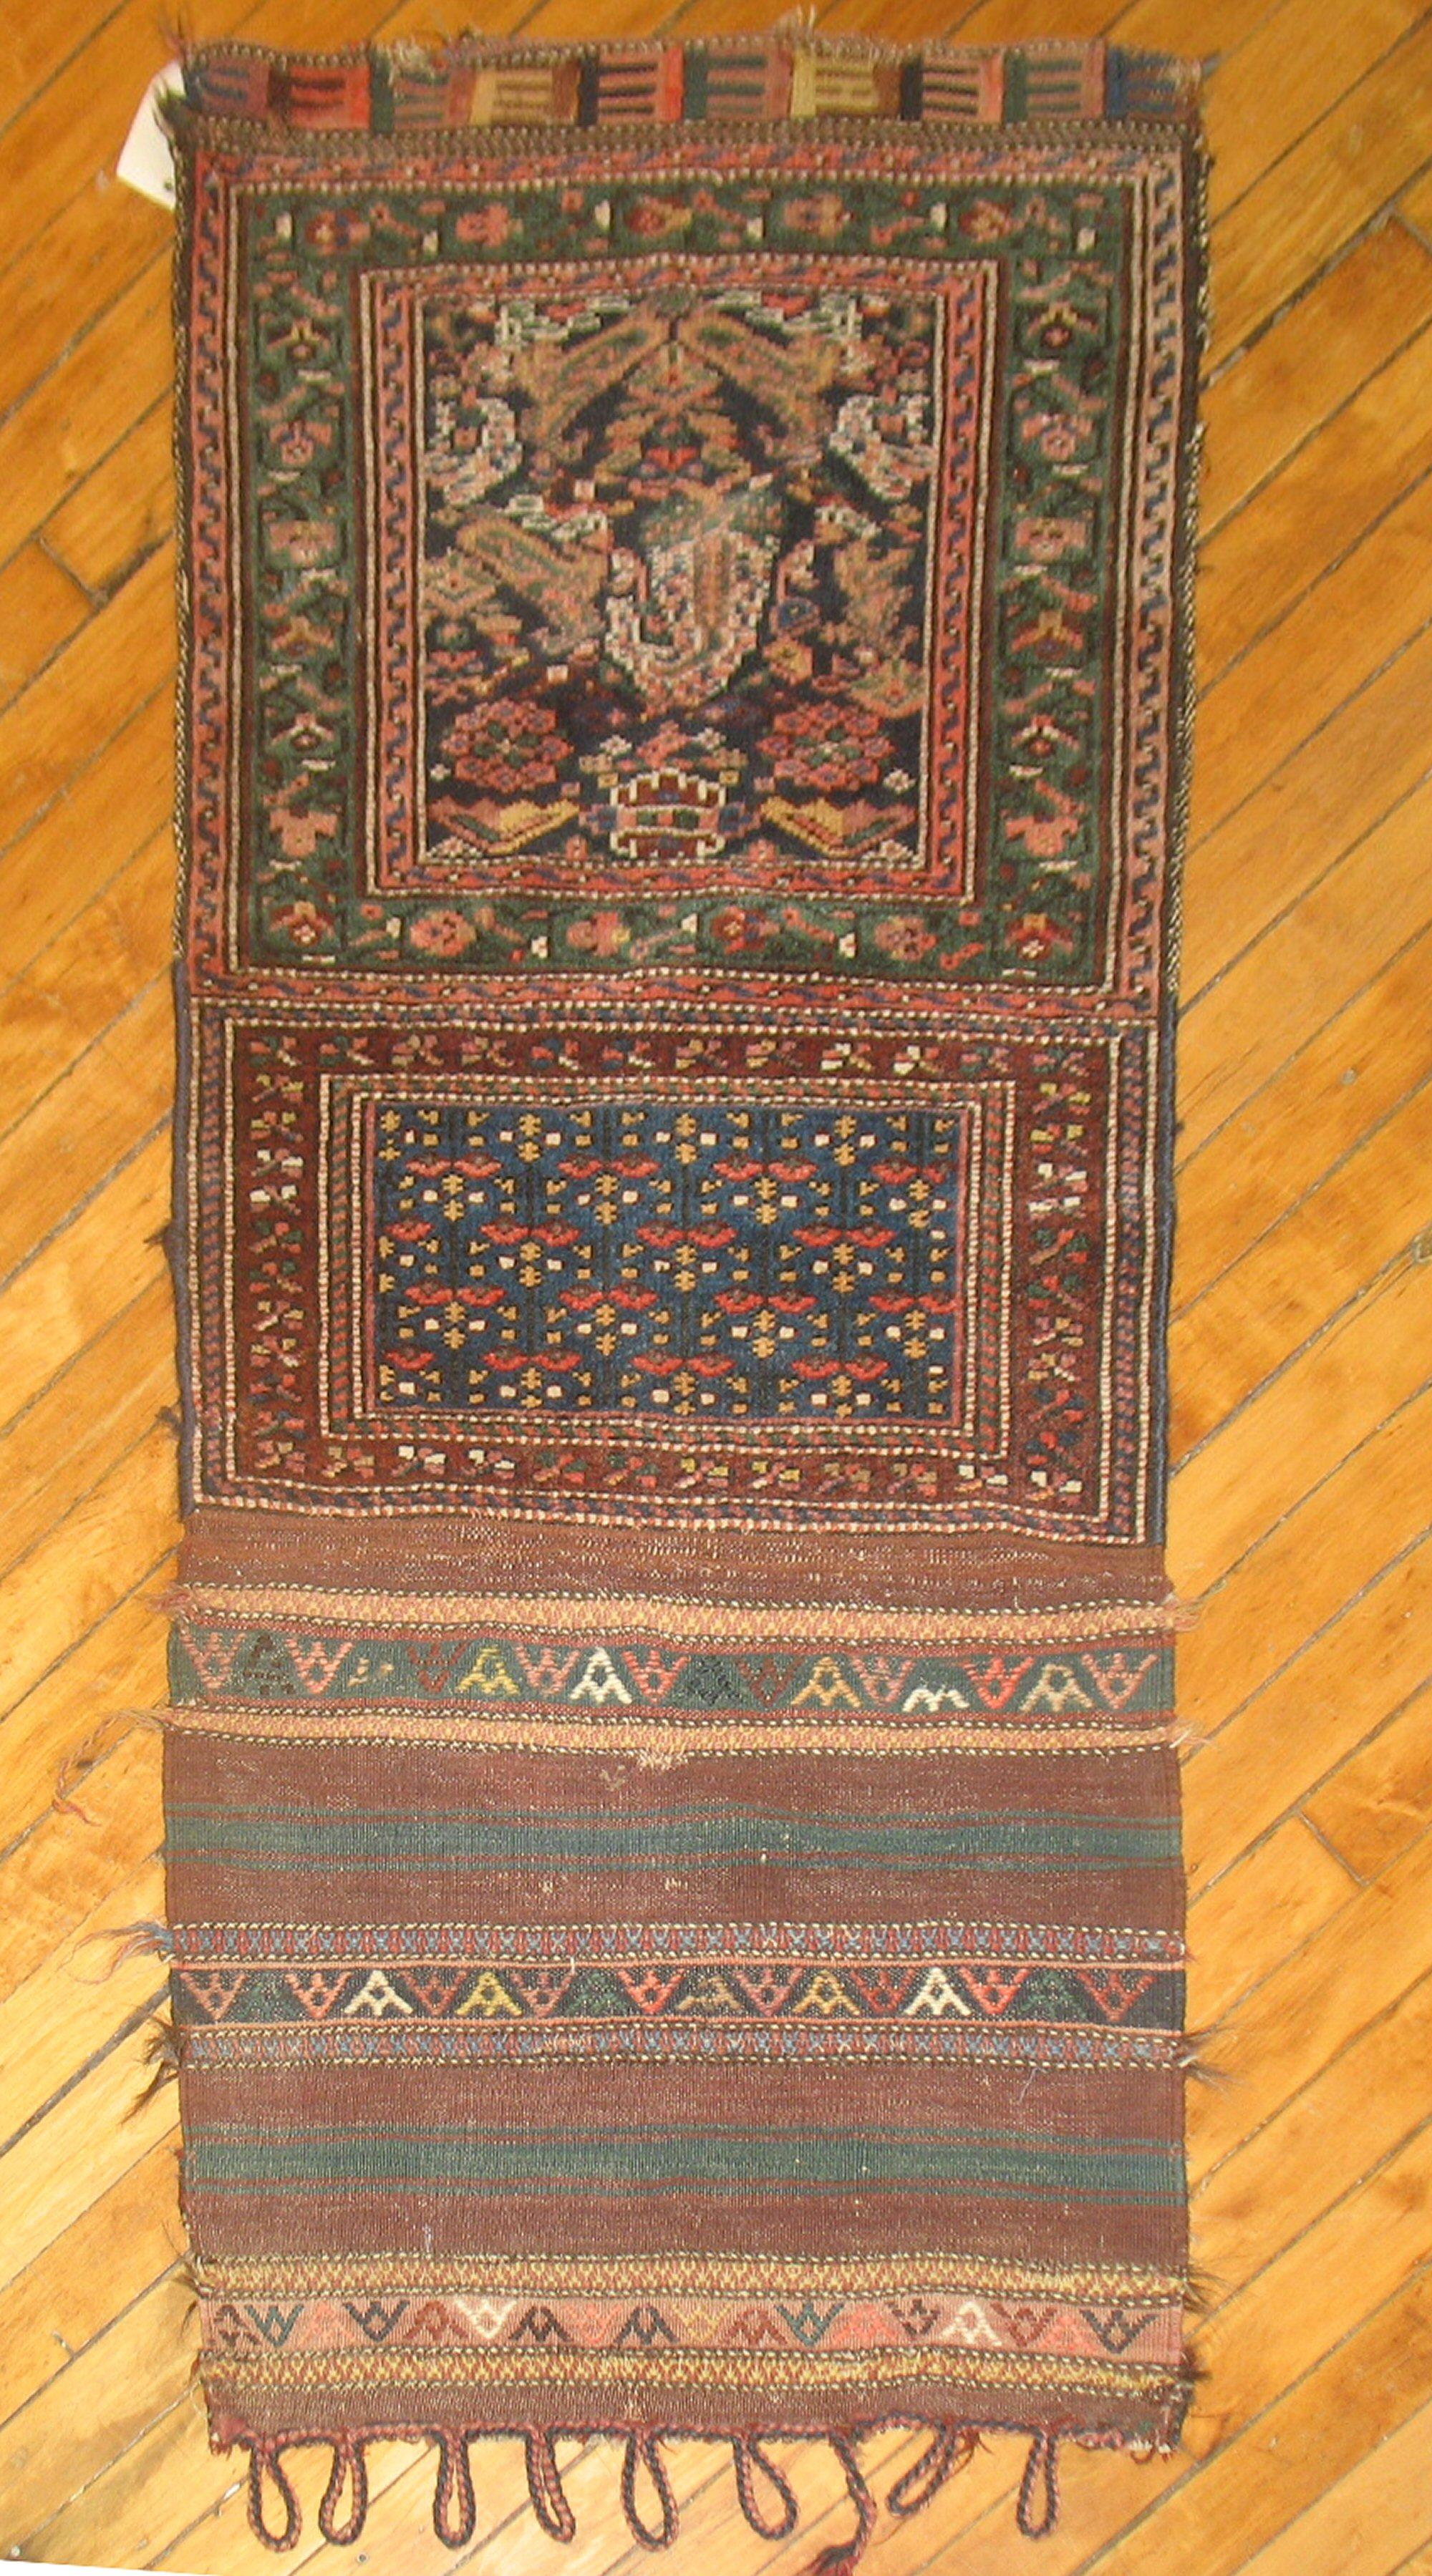 An early 20th century colorful Kurd Bagface textile rug 

Measures: 1'9